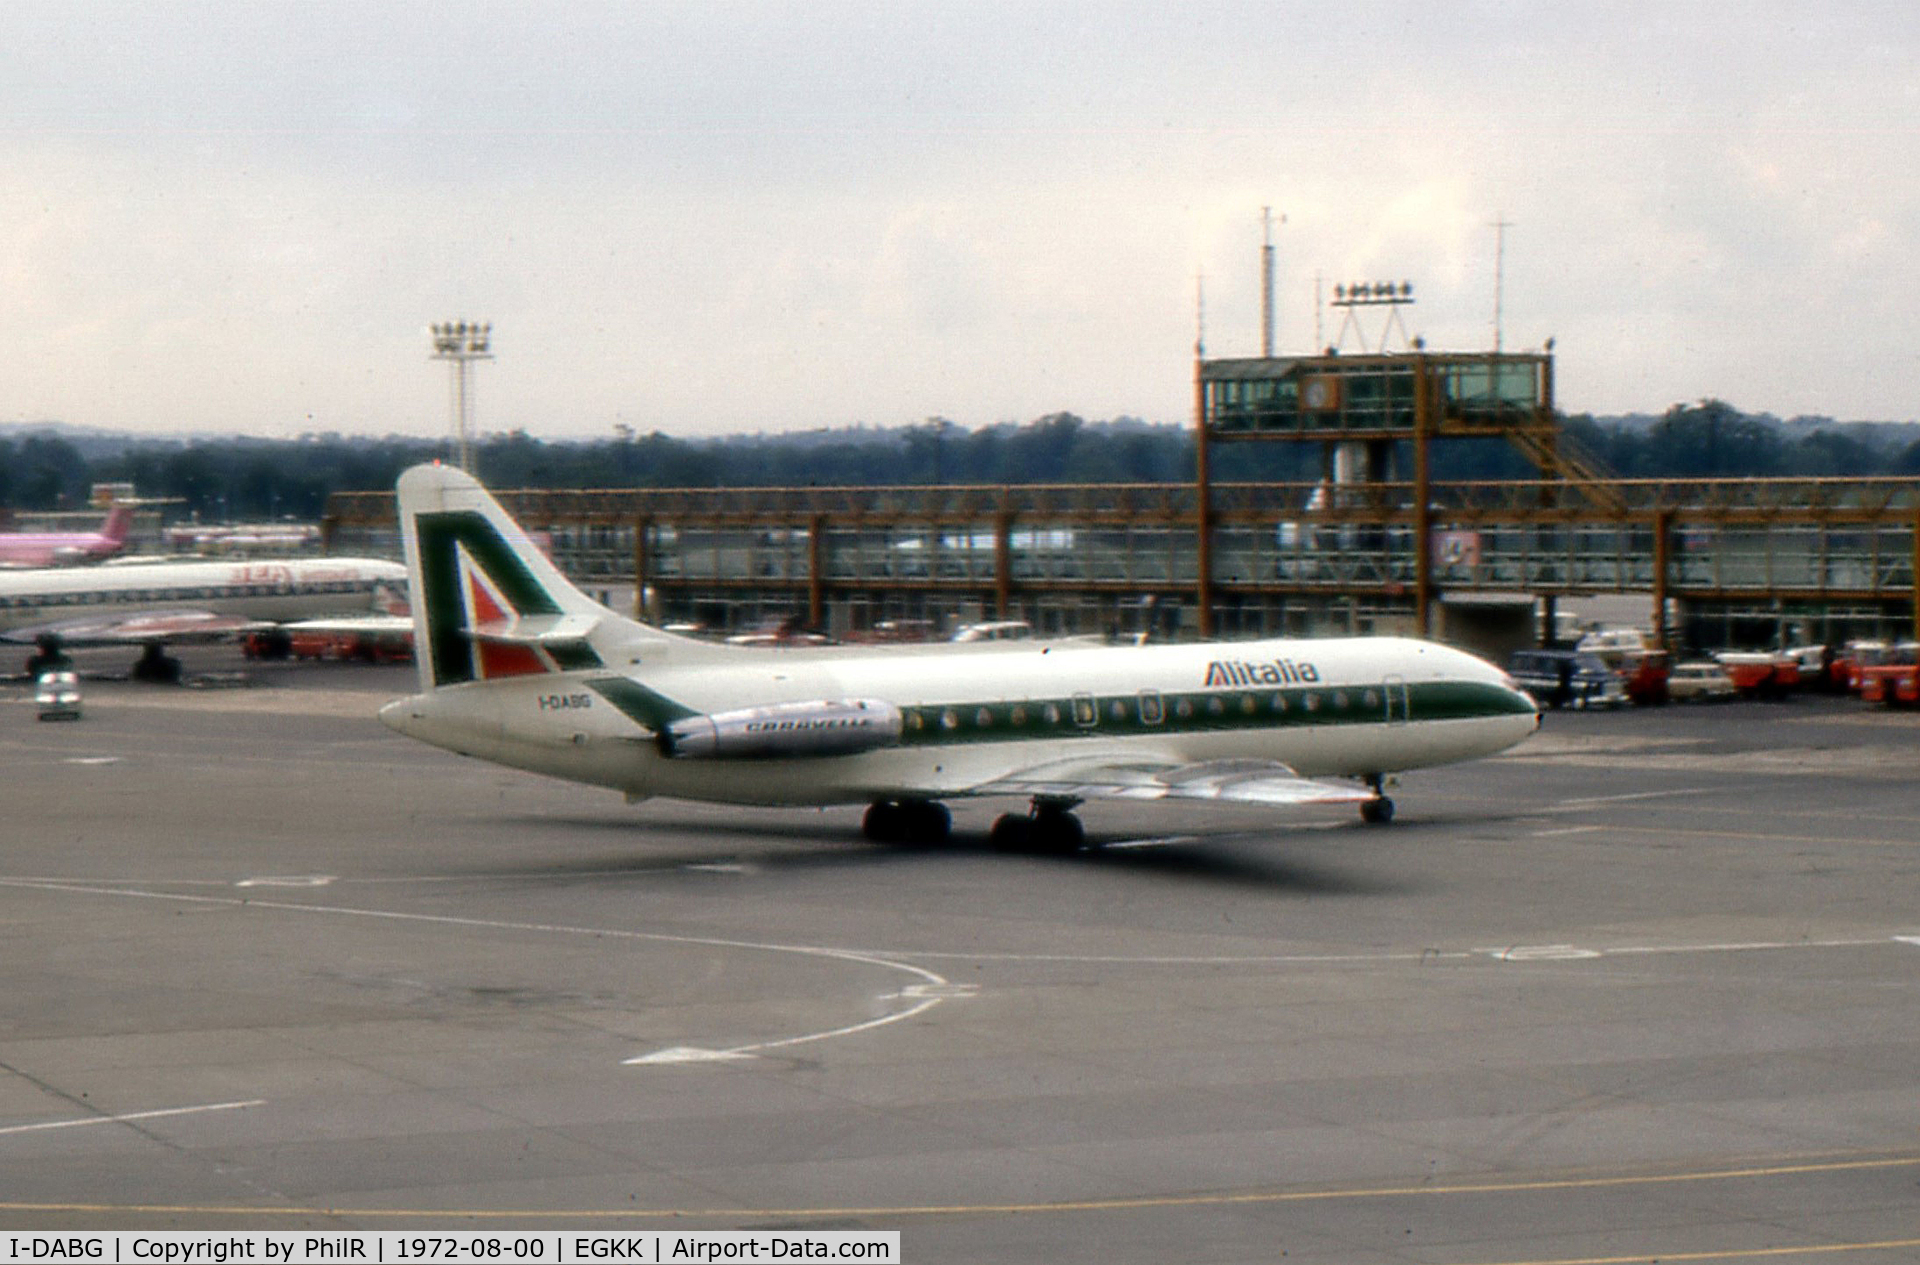 I-DABG, 1966 Sud Aviation SE-210 Caravelle VI-N C/N 205, Alitalia 1966 SE210 Caravelle VI-N I-DABG LGW